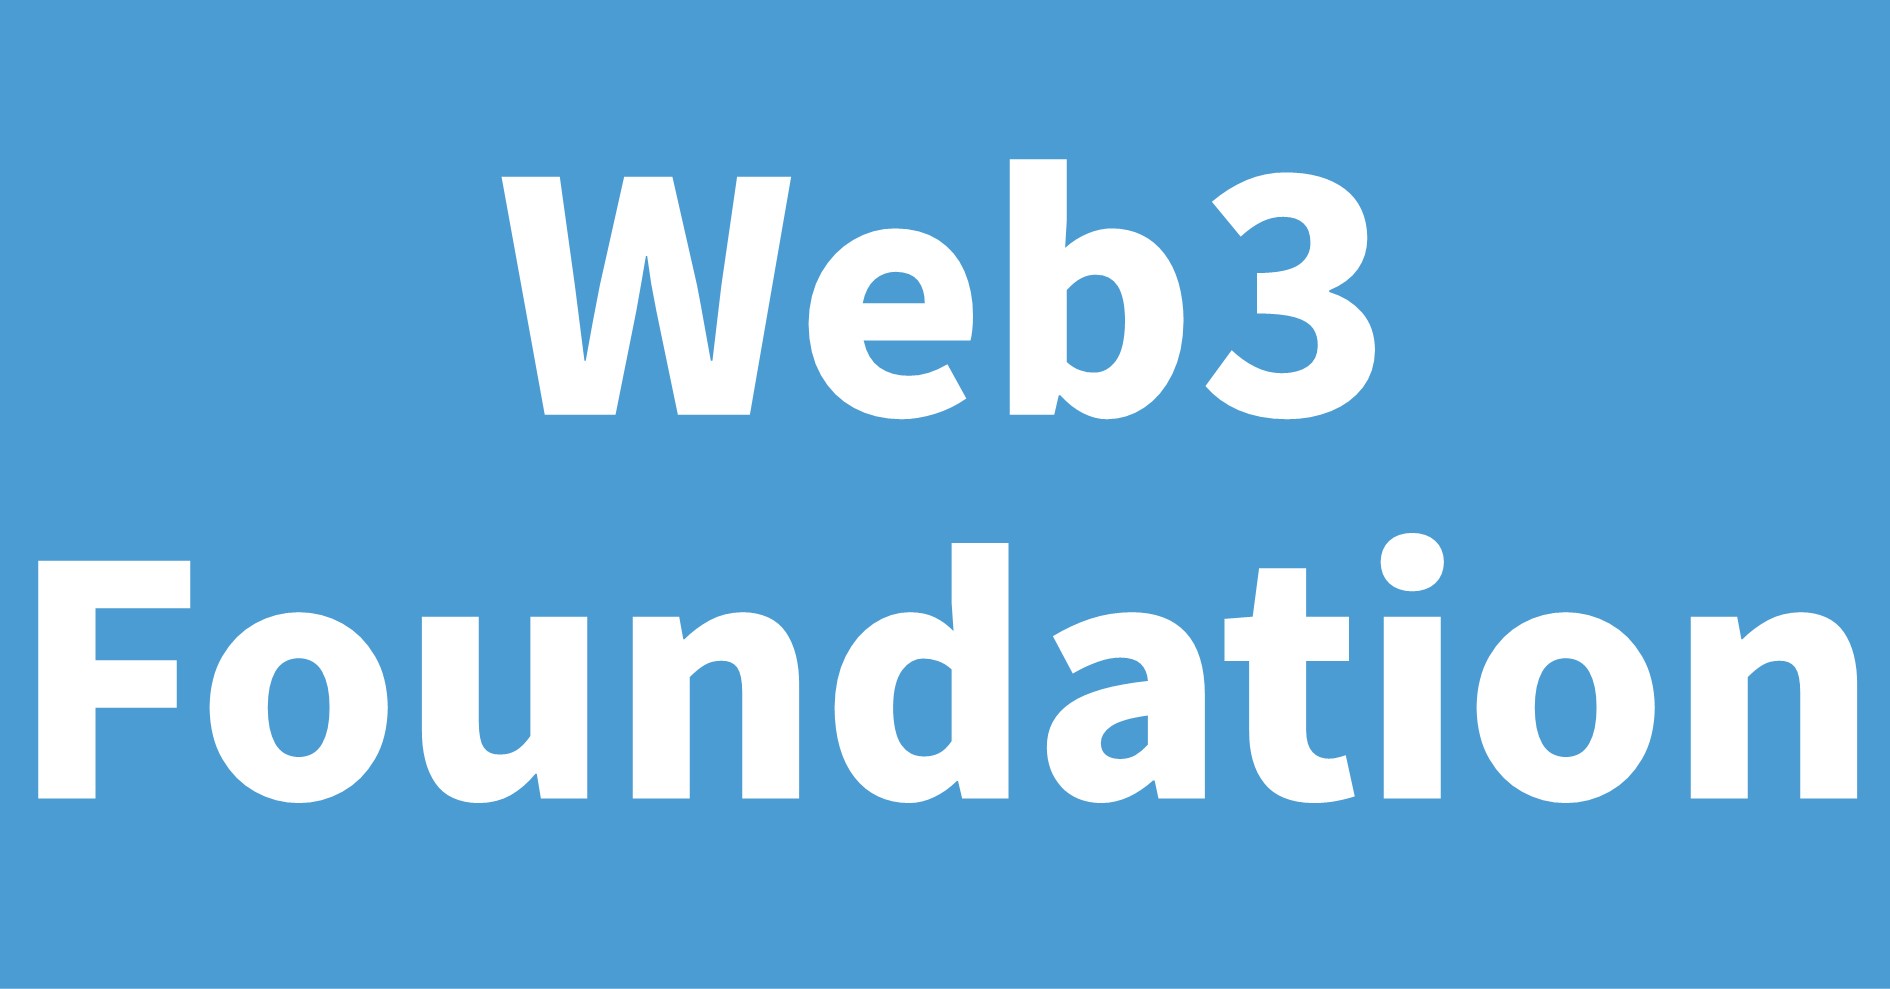 Web3 Foundation